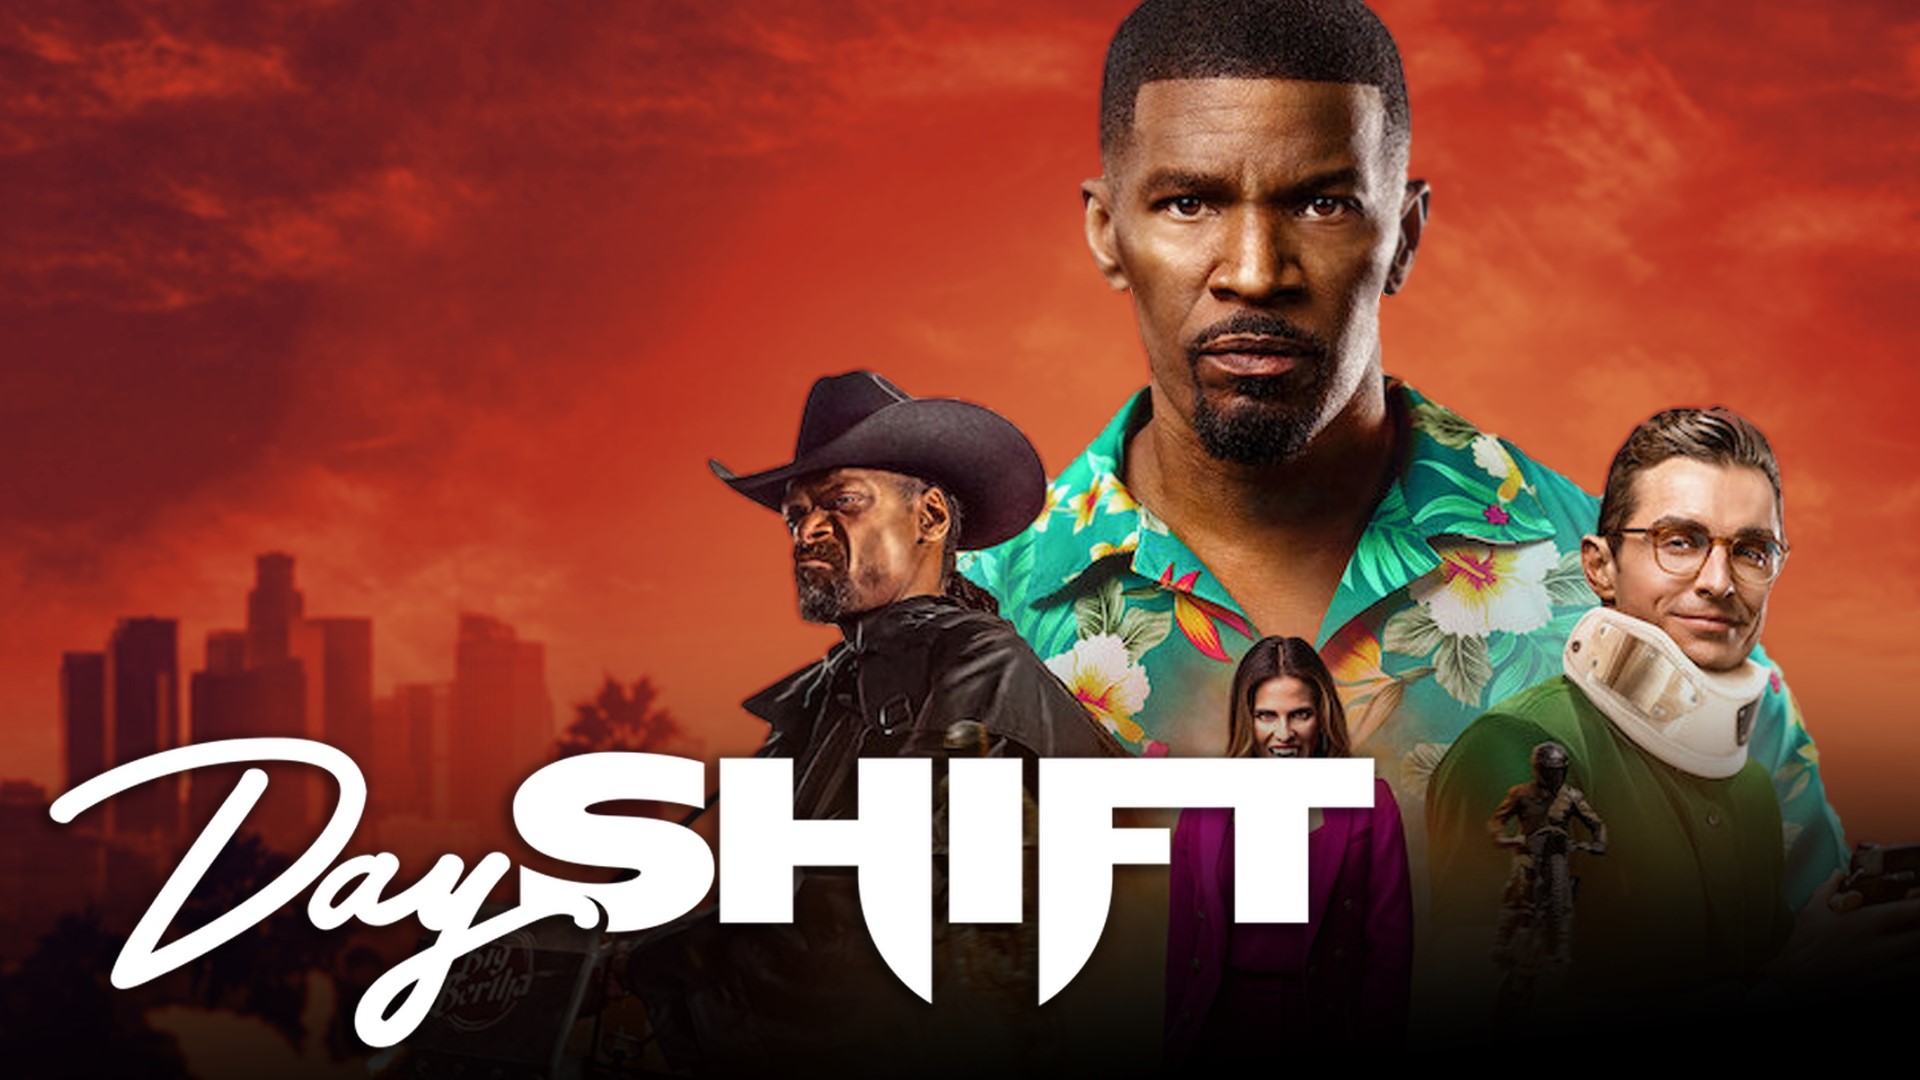 Day Shift Movie Review thv11com